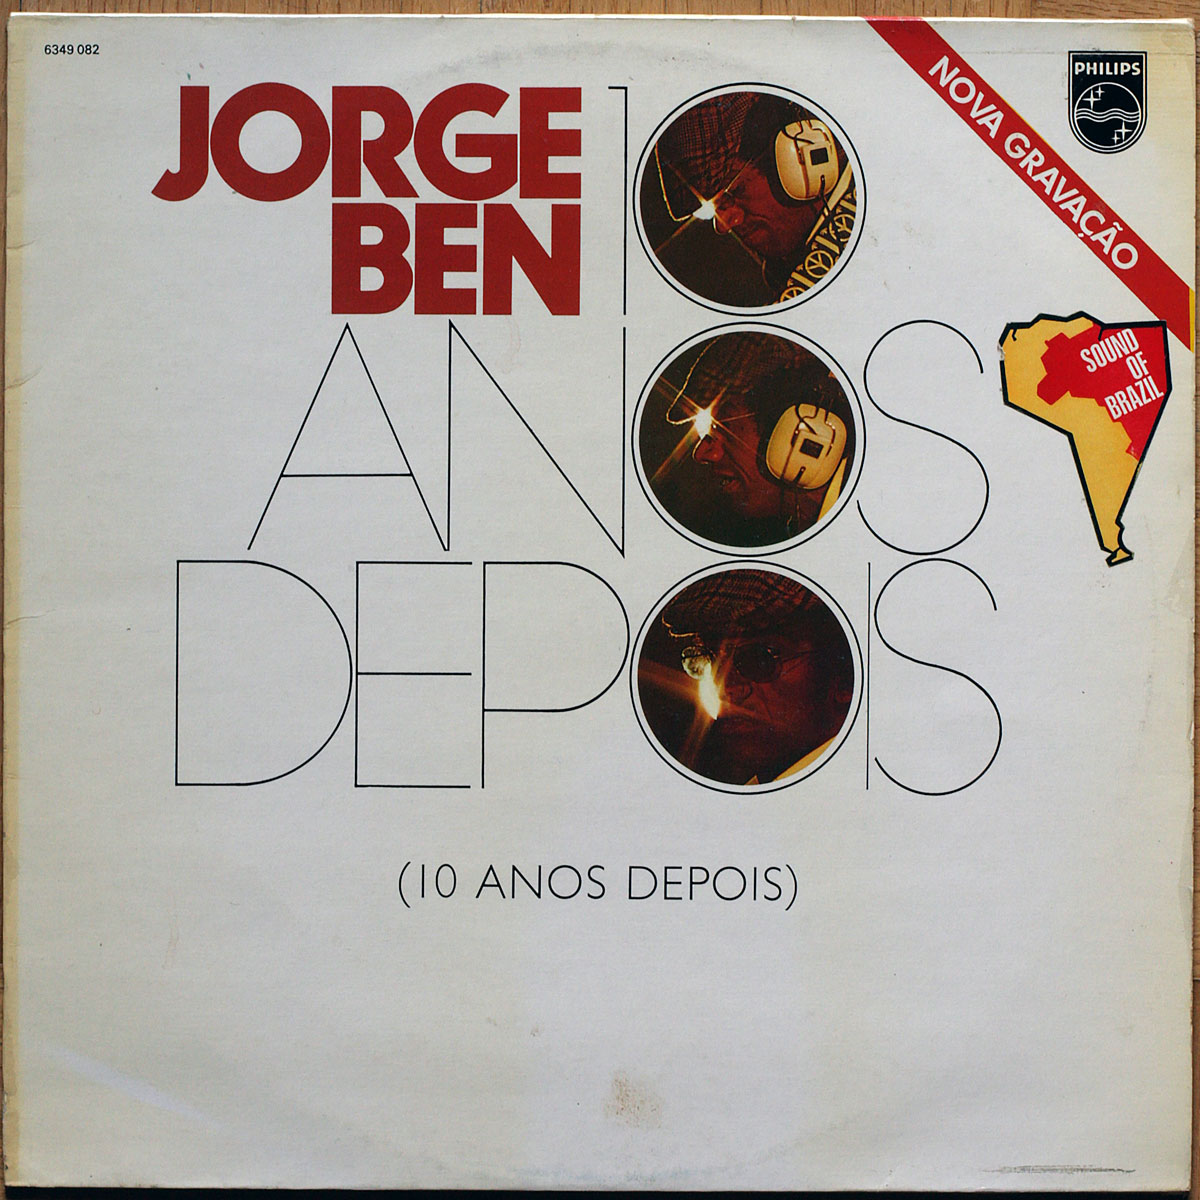 Jorge Ben • 10 anos depois • Philips 6349 082